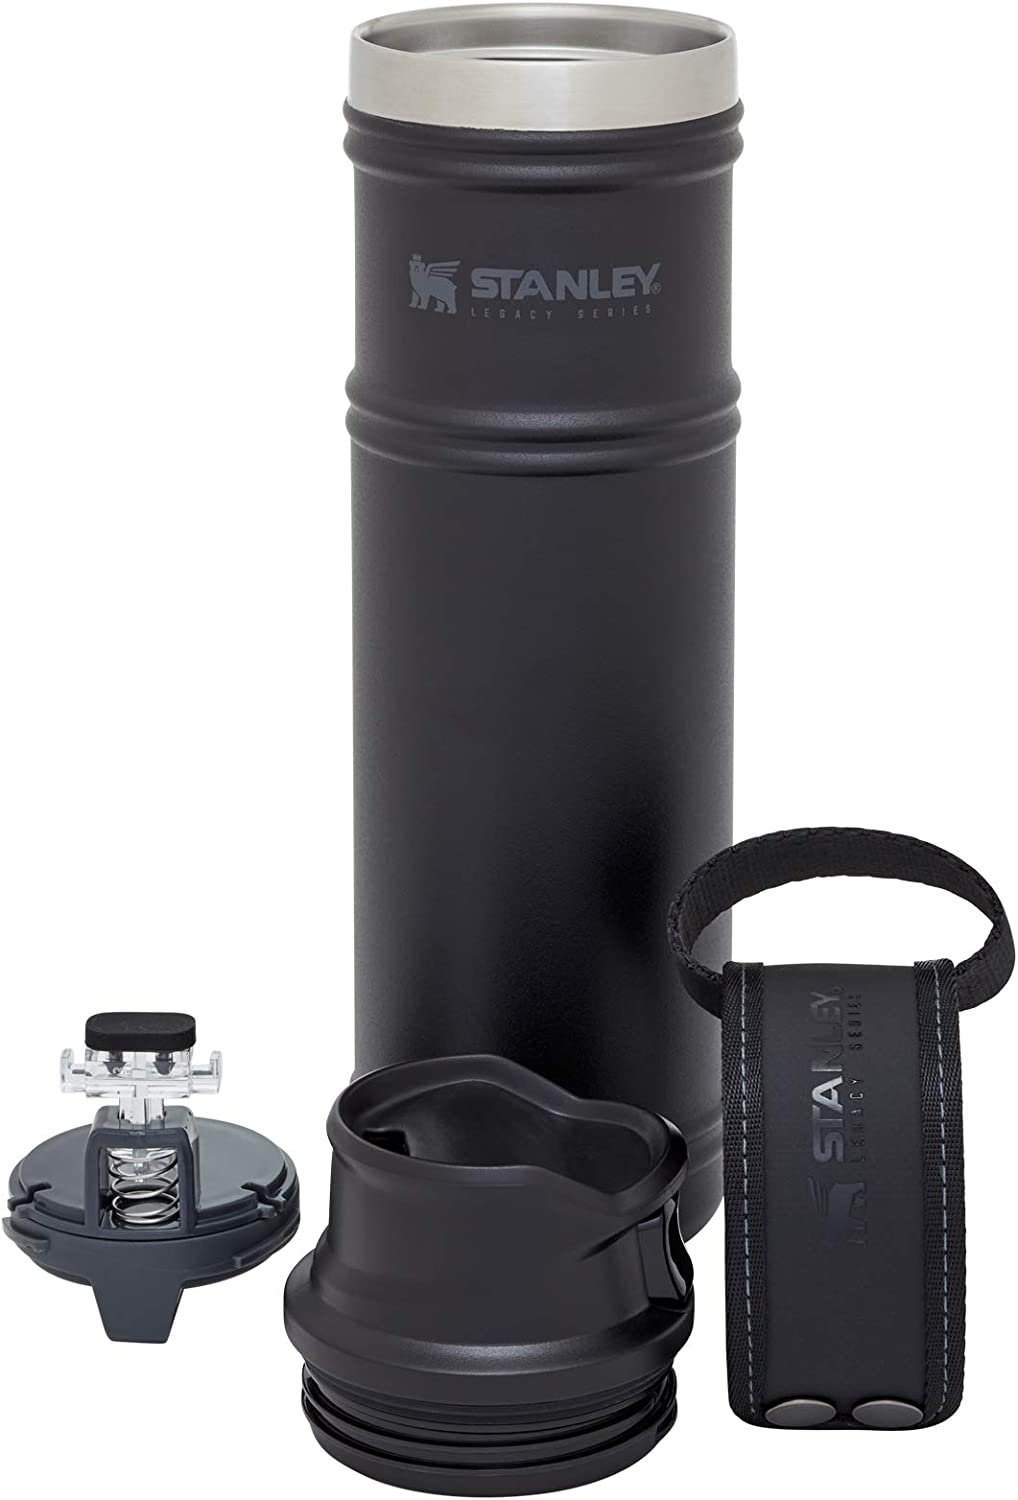 Stanley Trigger-Action Stainless Steel Travel Mug, 20 oz